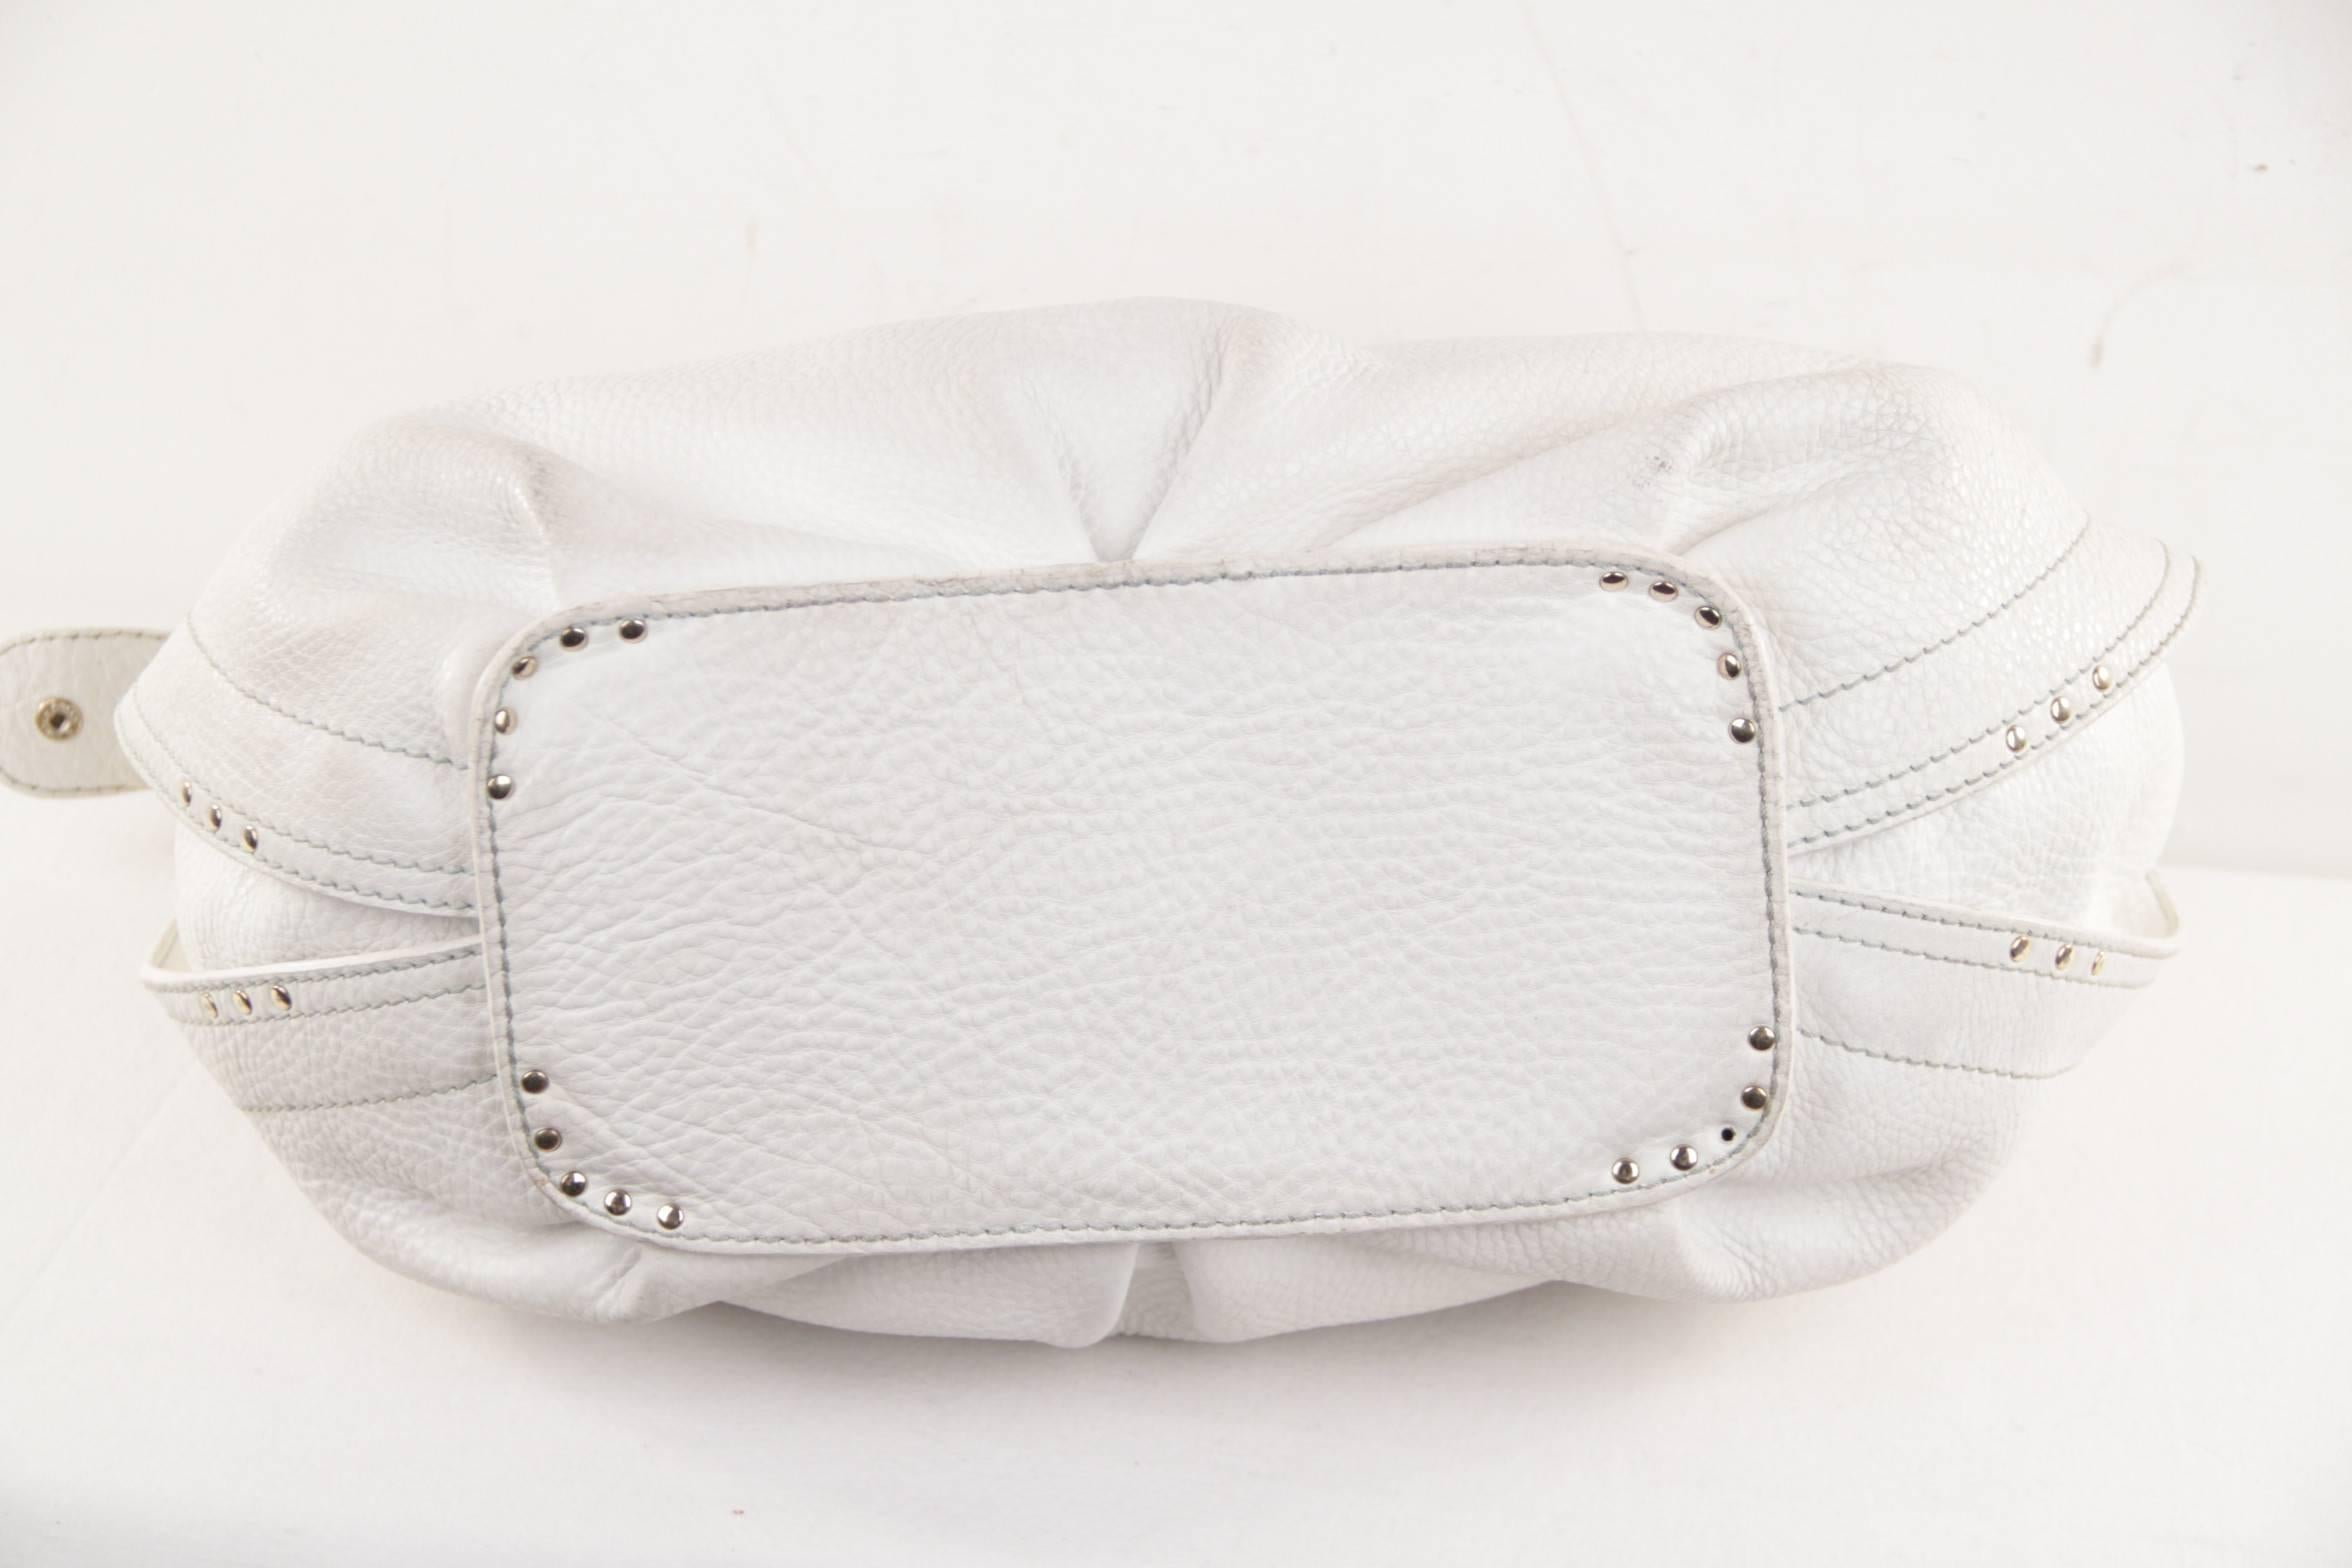 Gray CELINE PARIS White Leather SHOULDER BAG Handbag TOTE w/ STUDS Detailing